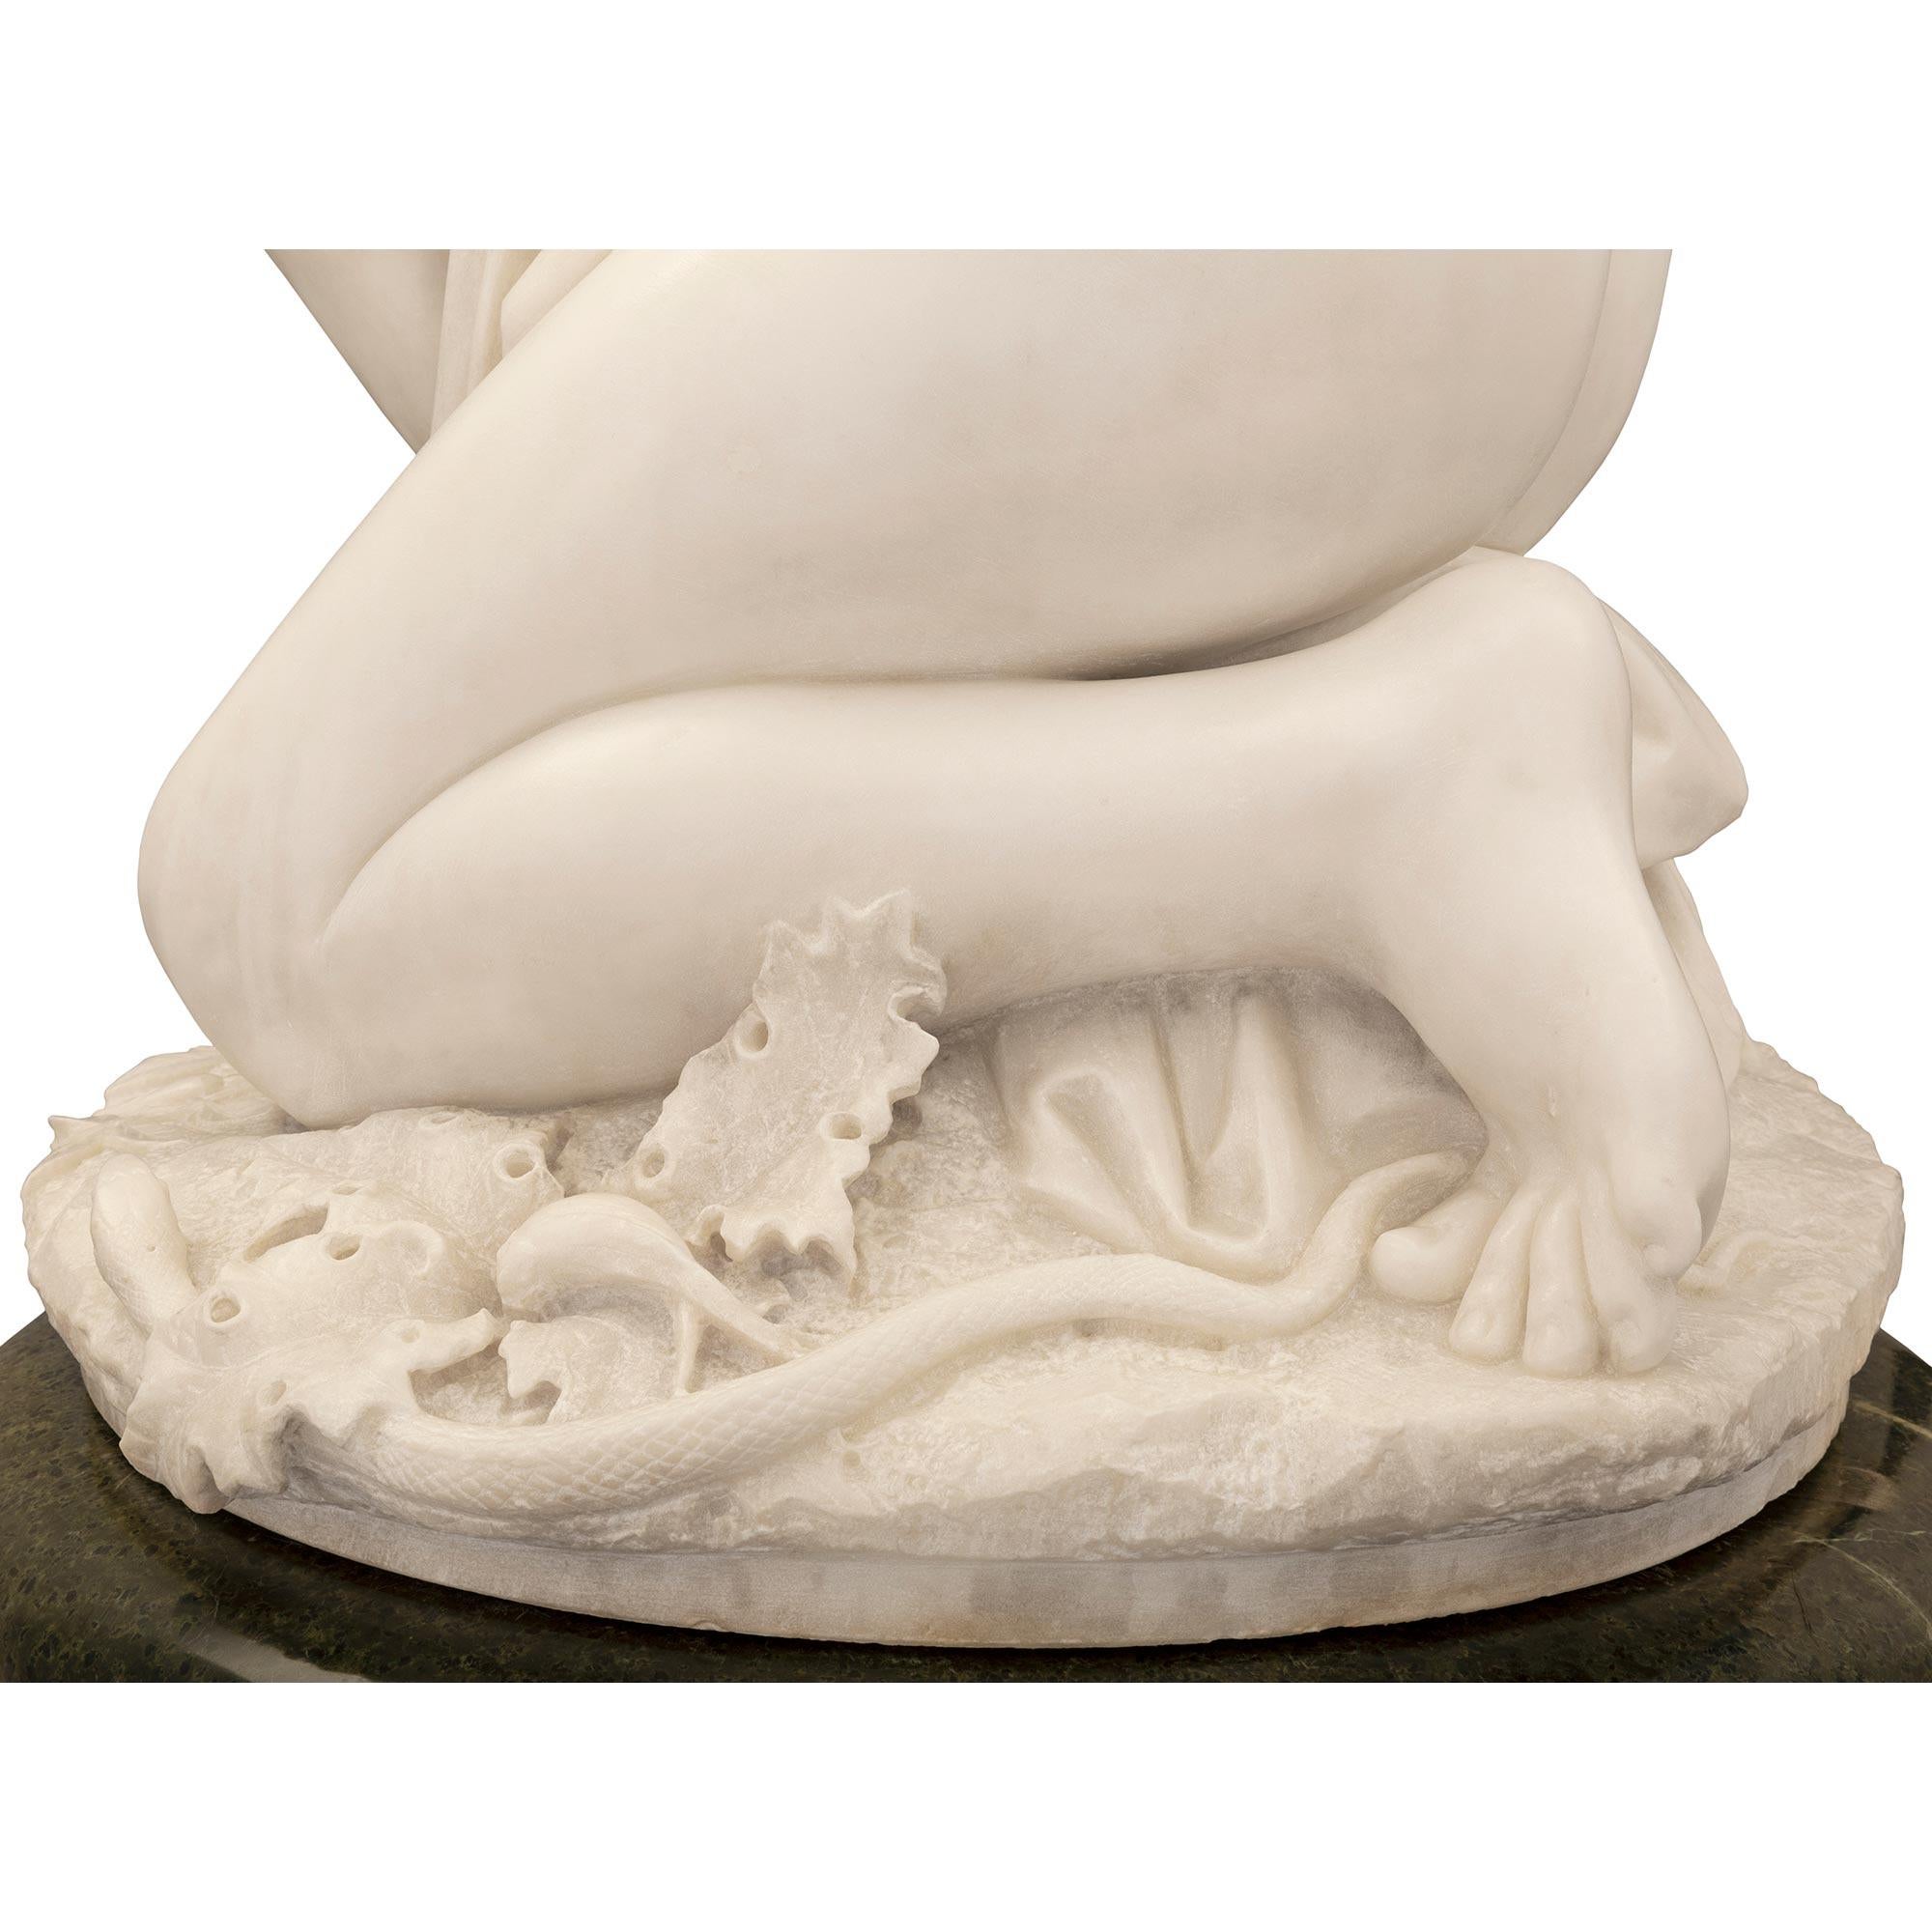 Italian 19th Century White Carrara Marble Statue on Its Original Pedestal For Sale 6